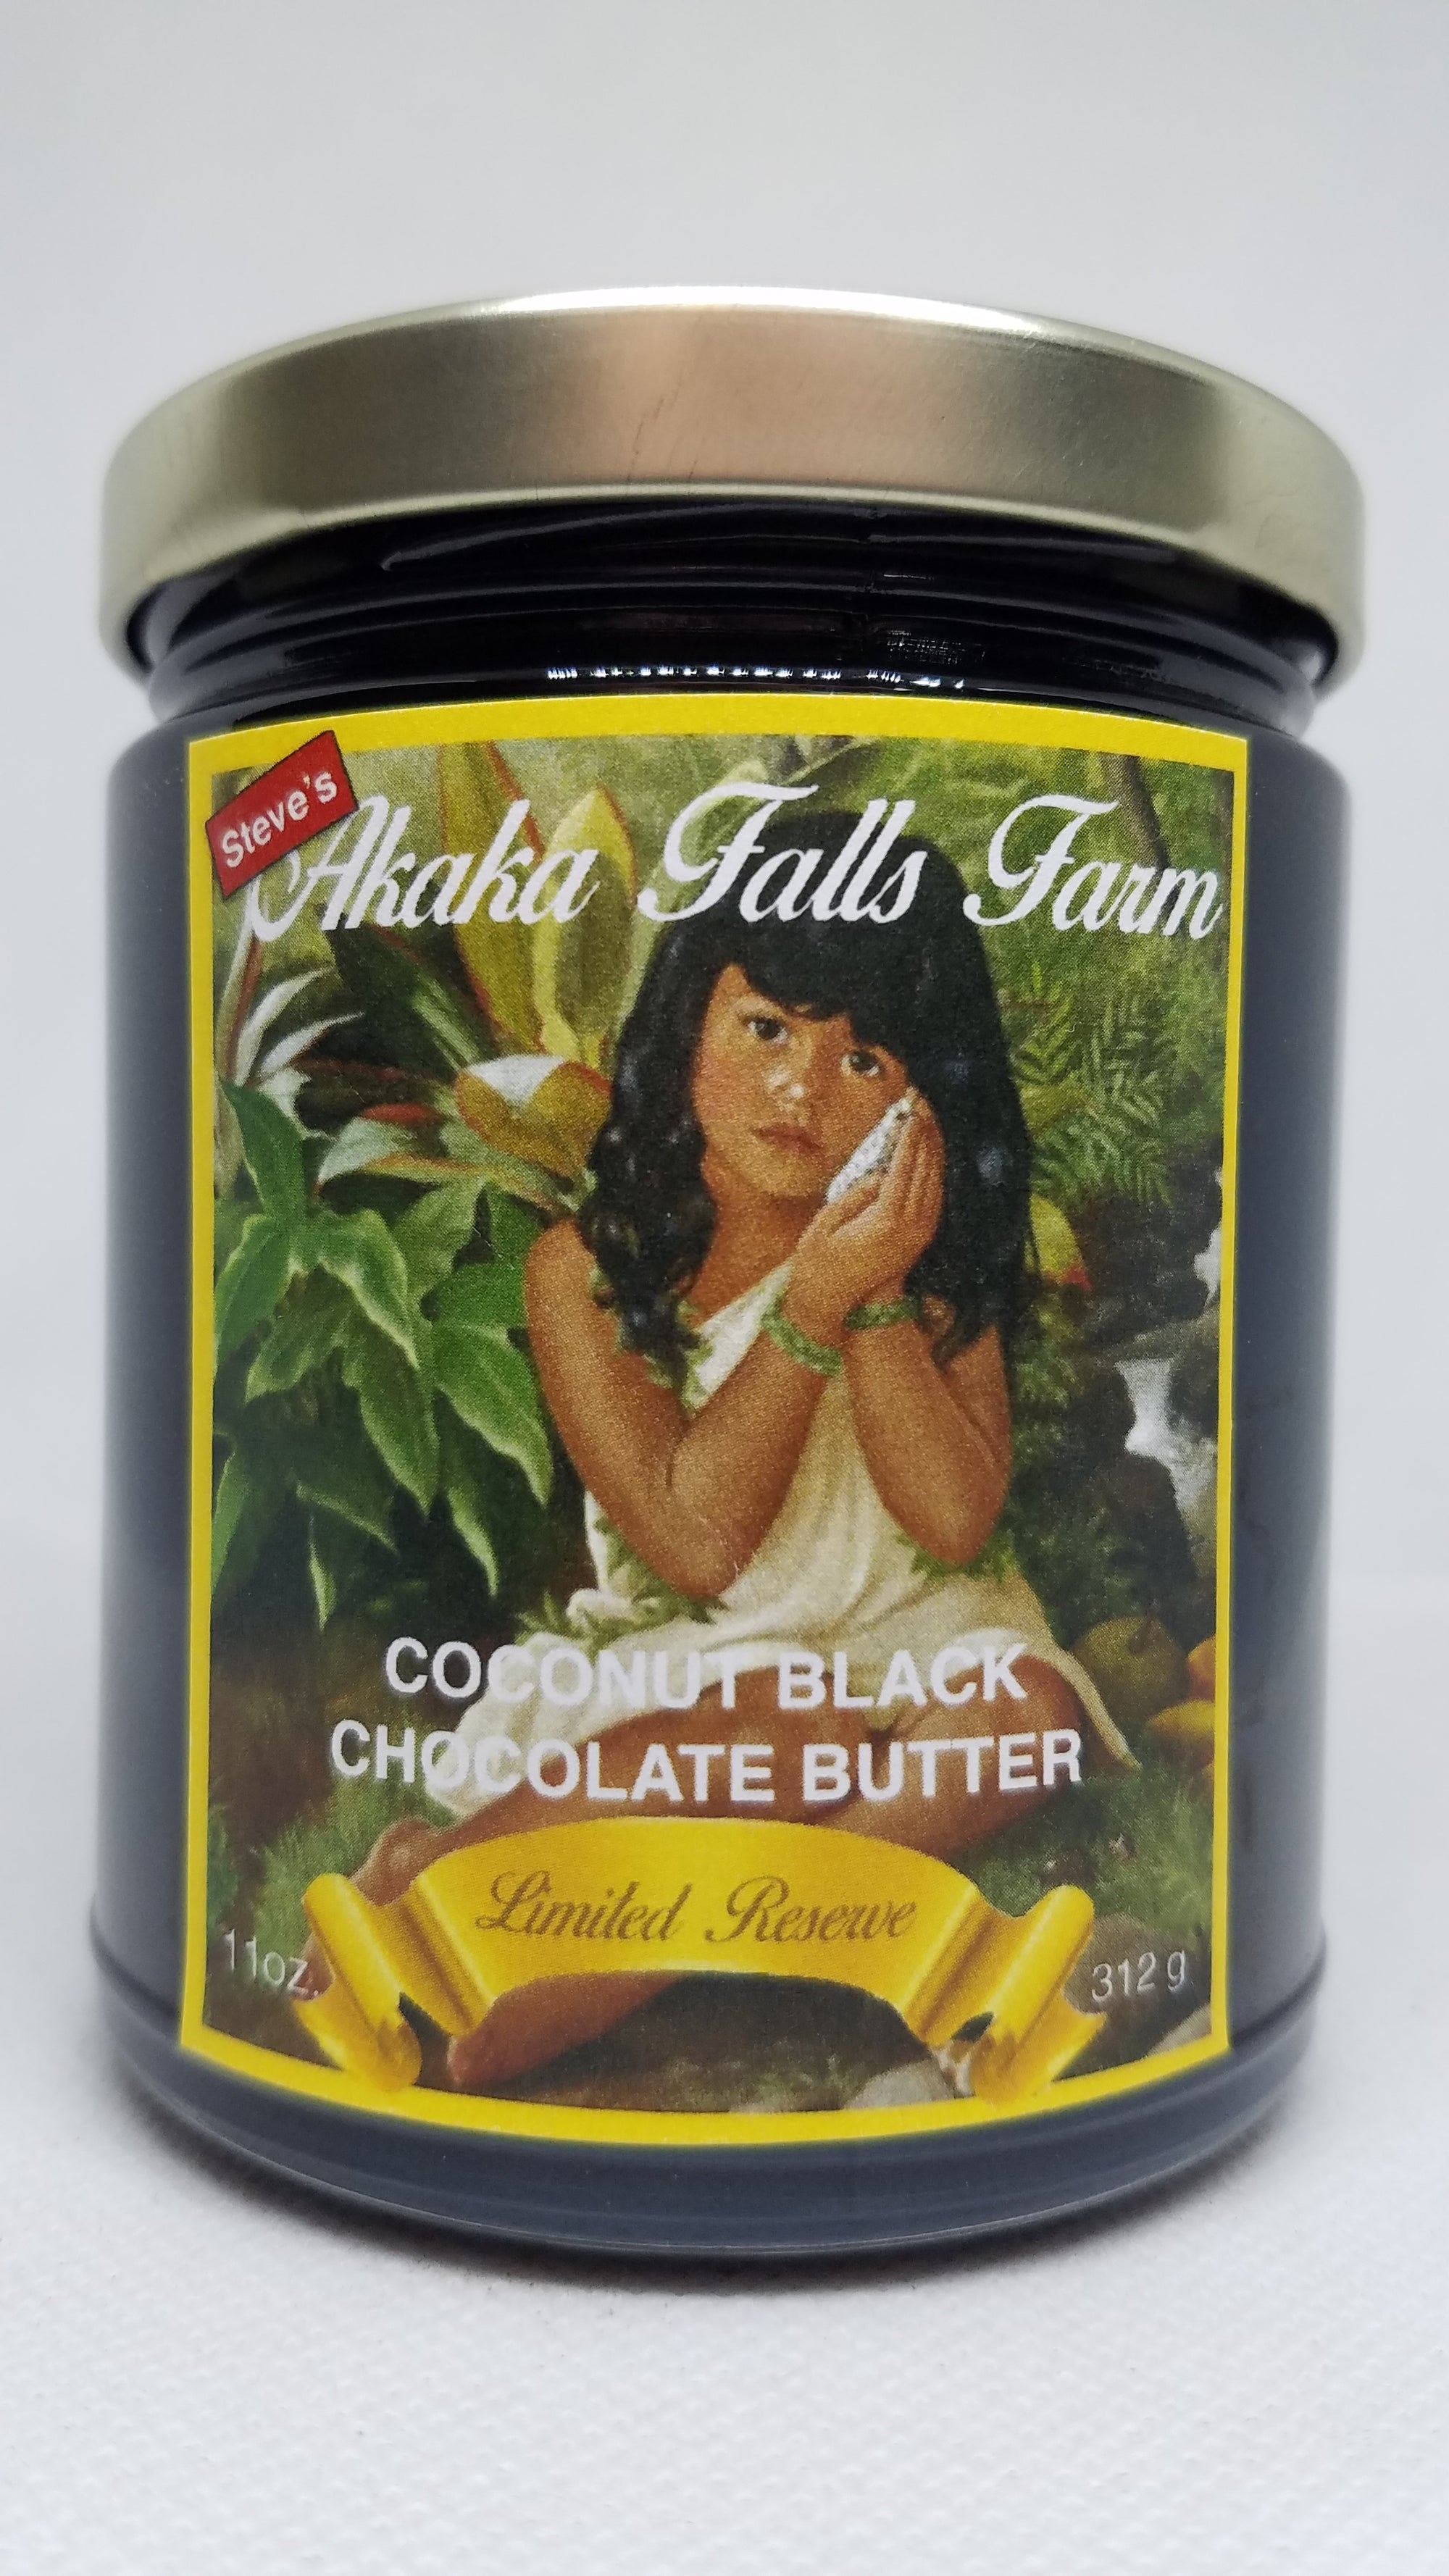 Pop-Up Mākeke - Akaka Falls Farm - Coconut Black Chocolate Butter - Front View